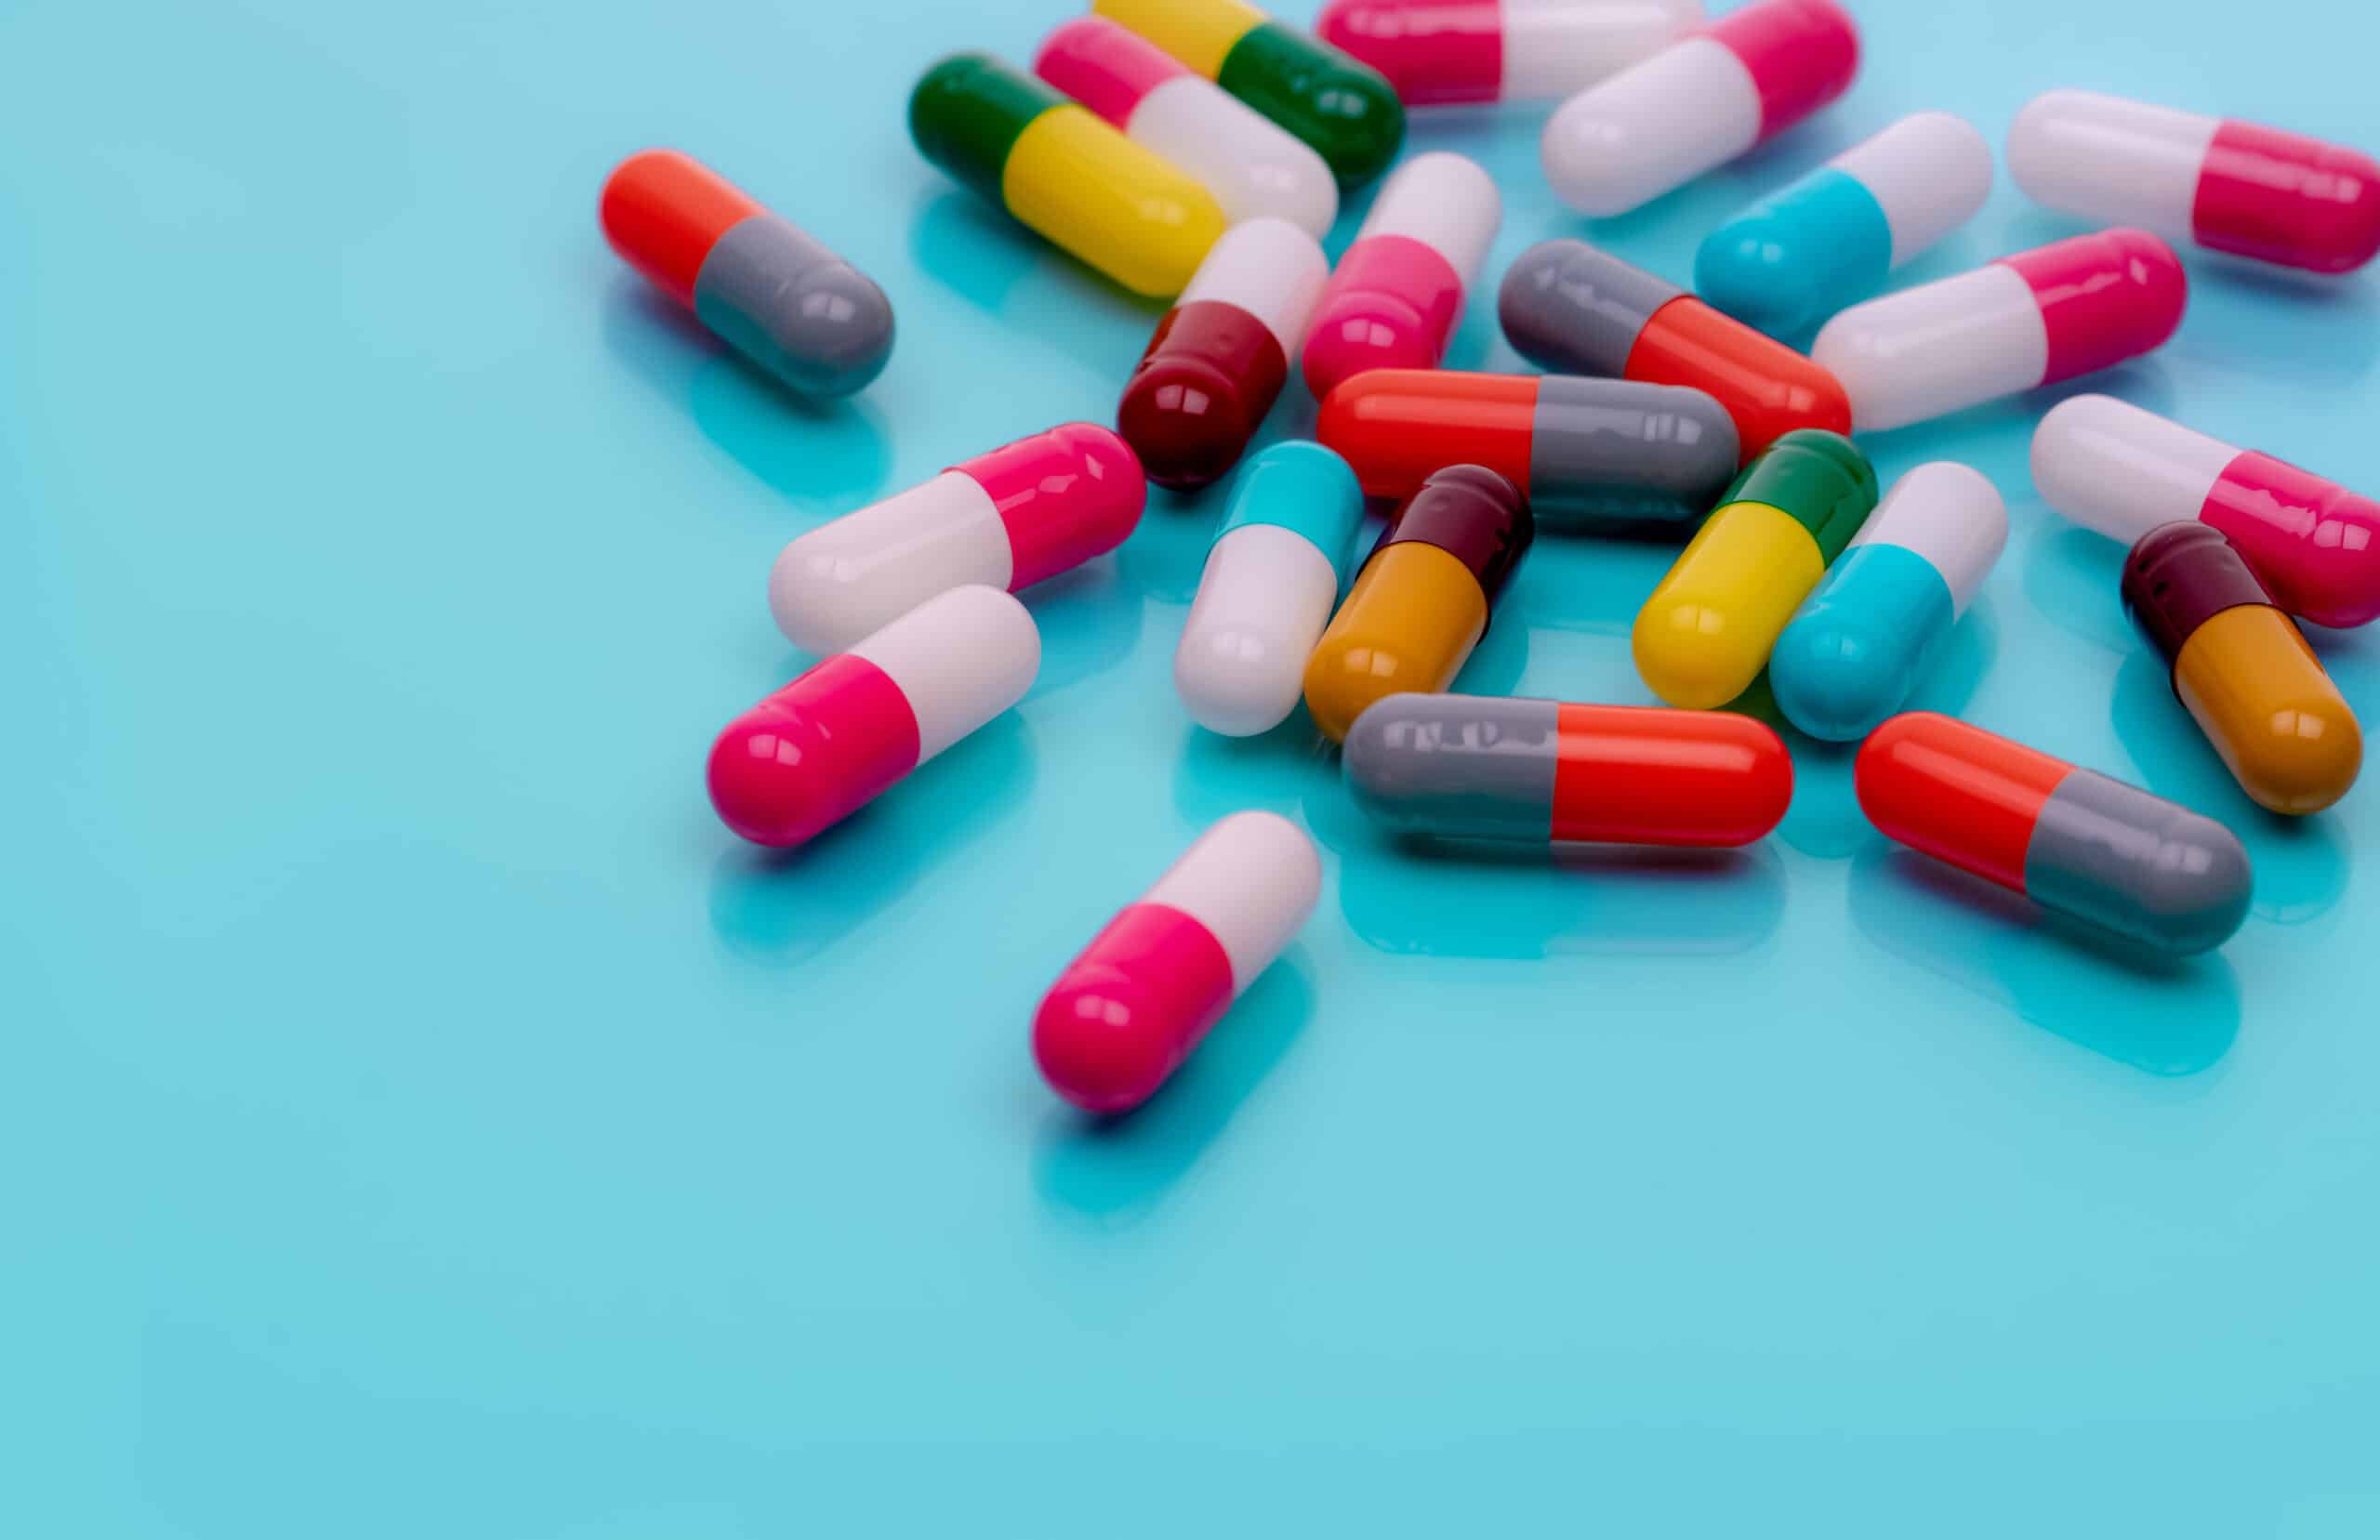 antibiotic capsule pills on blue background presc 2022 10 25 10 04 47 utc scaled